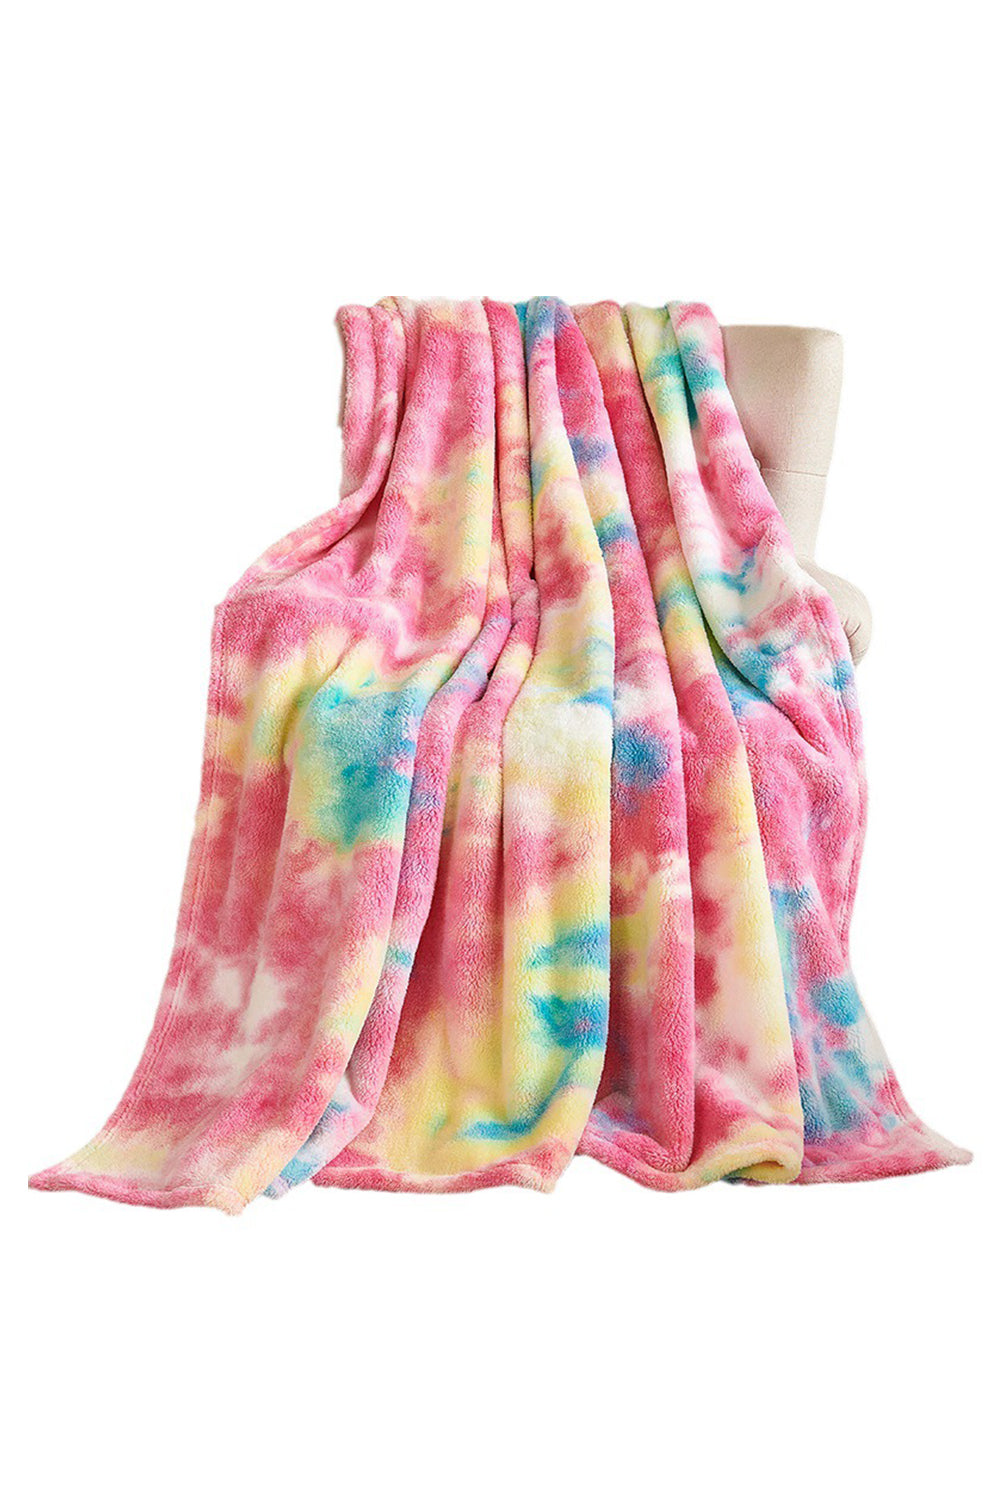 Multicolour Tie-Dye Blanket 150*200cm